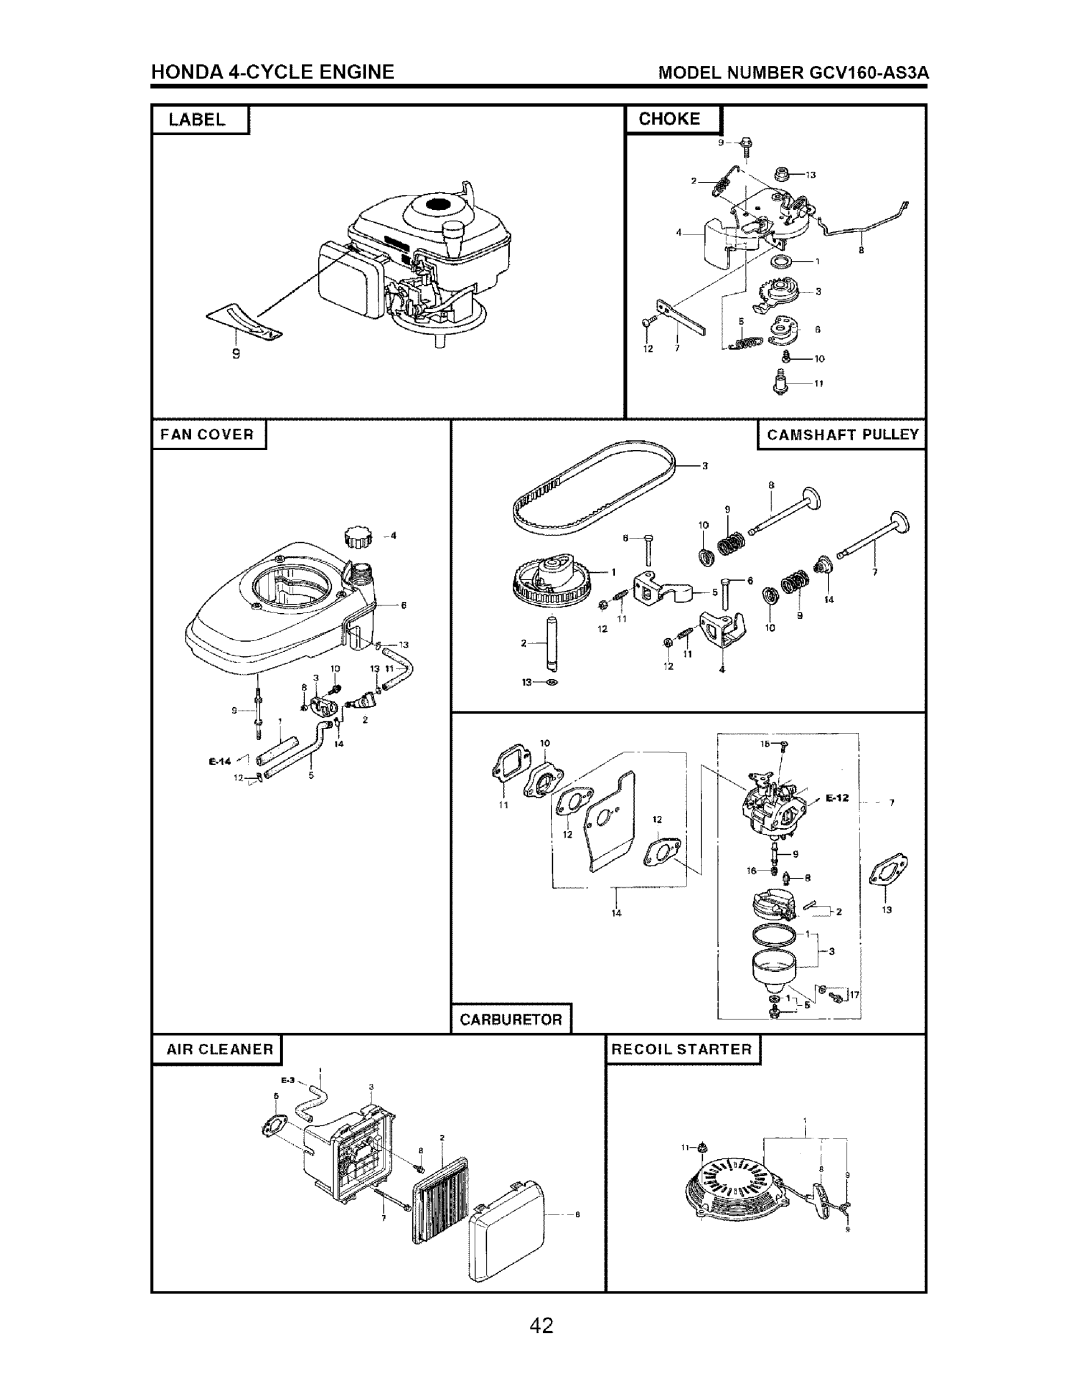 Craftsman 917.37172 owner manual HONDA 4-CYCLE ENGINE, MODEL NUMBER GCV160-AS3A, Label, Choke, Carburetor, Air Cleaner J 